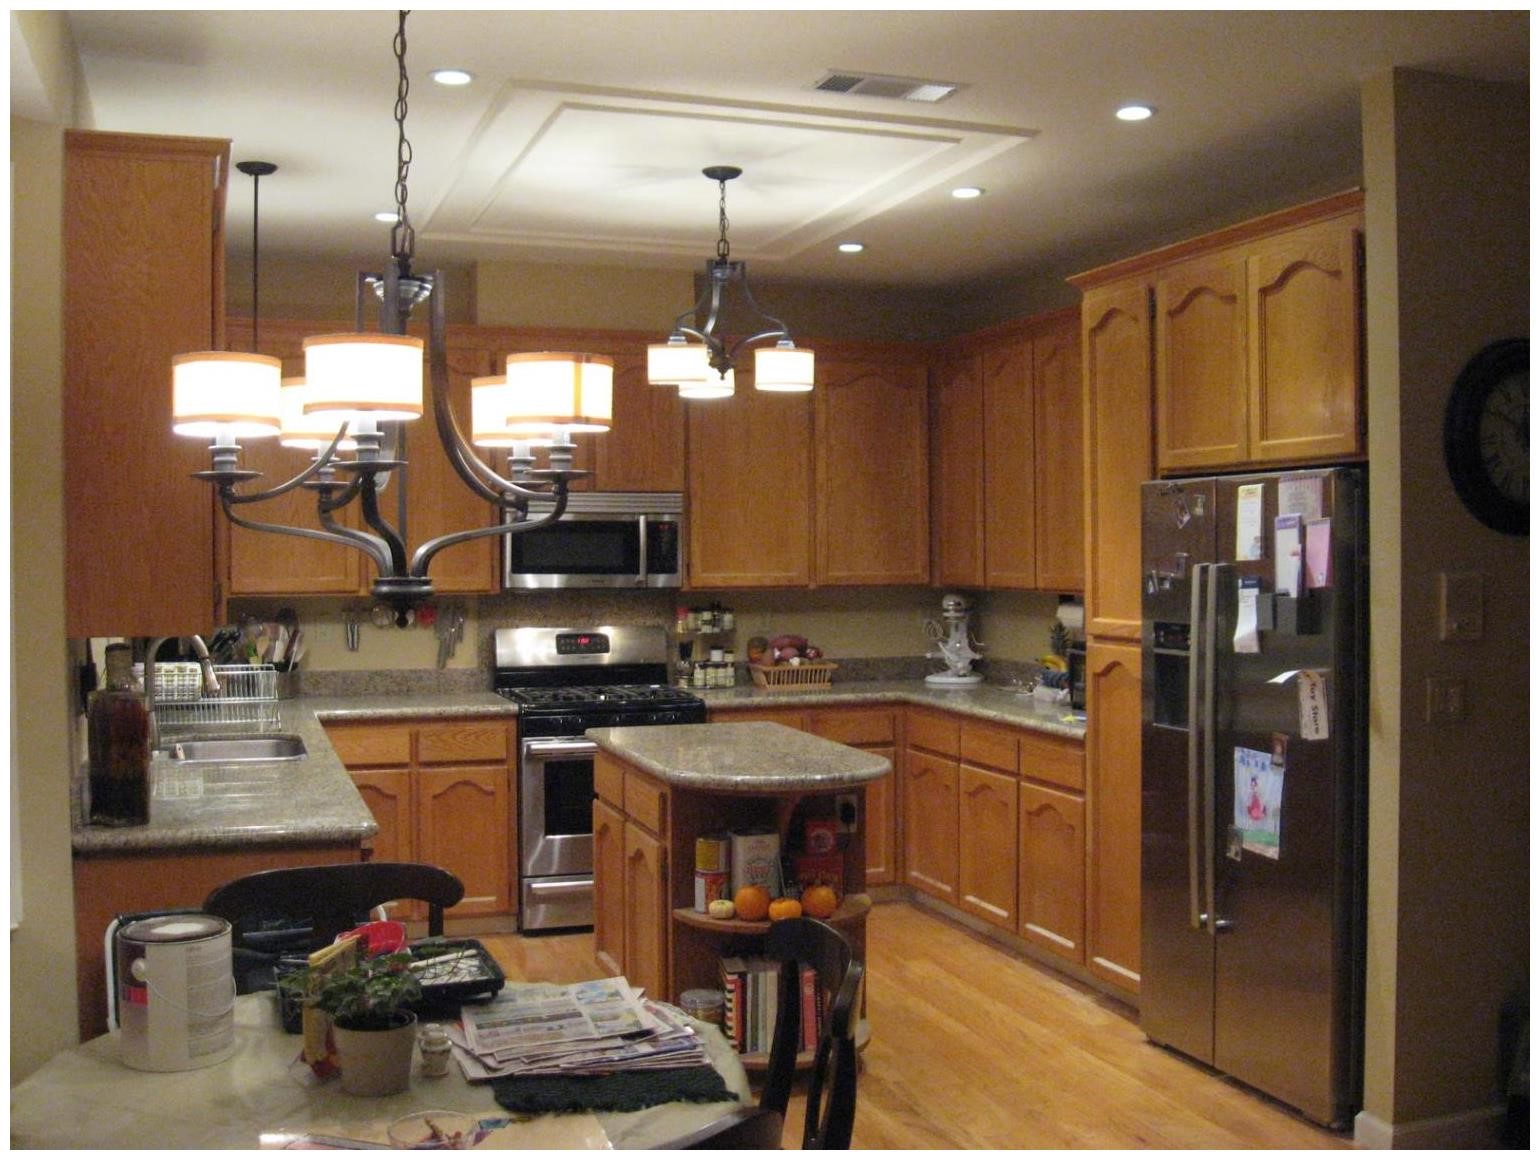 19 Rustic Kitchen Lights Kitchen Room Led Kitchen Lights Cool Features Kitchen  Rustic,Kitchen,Lights